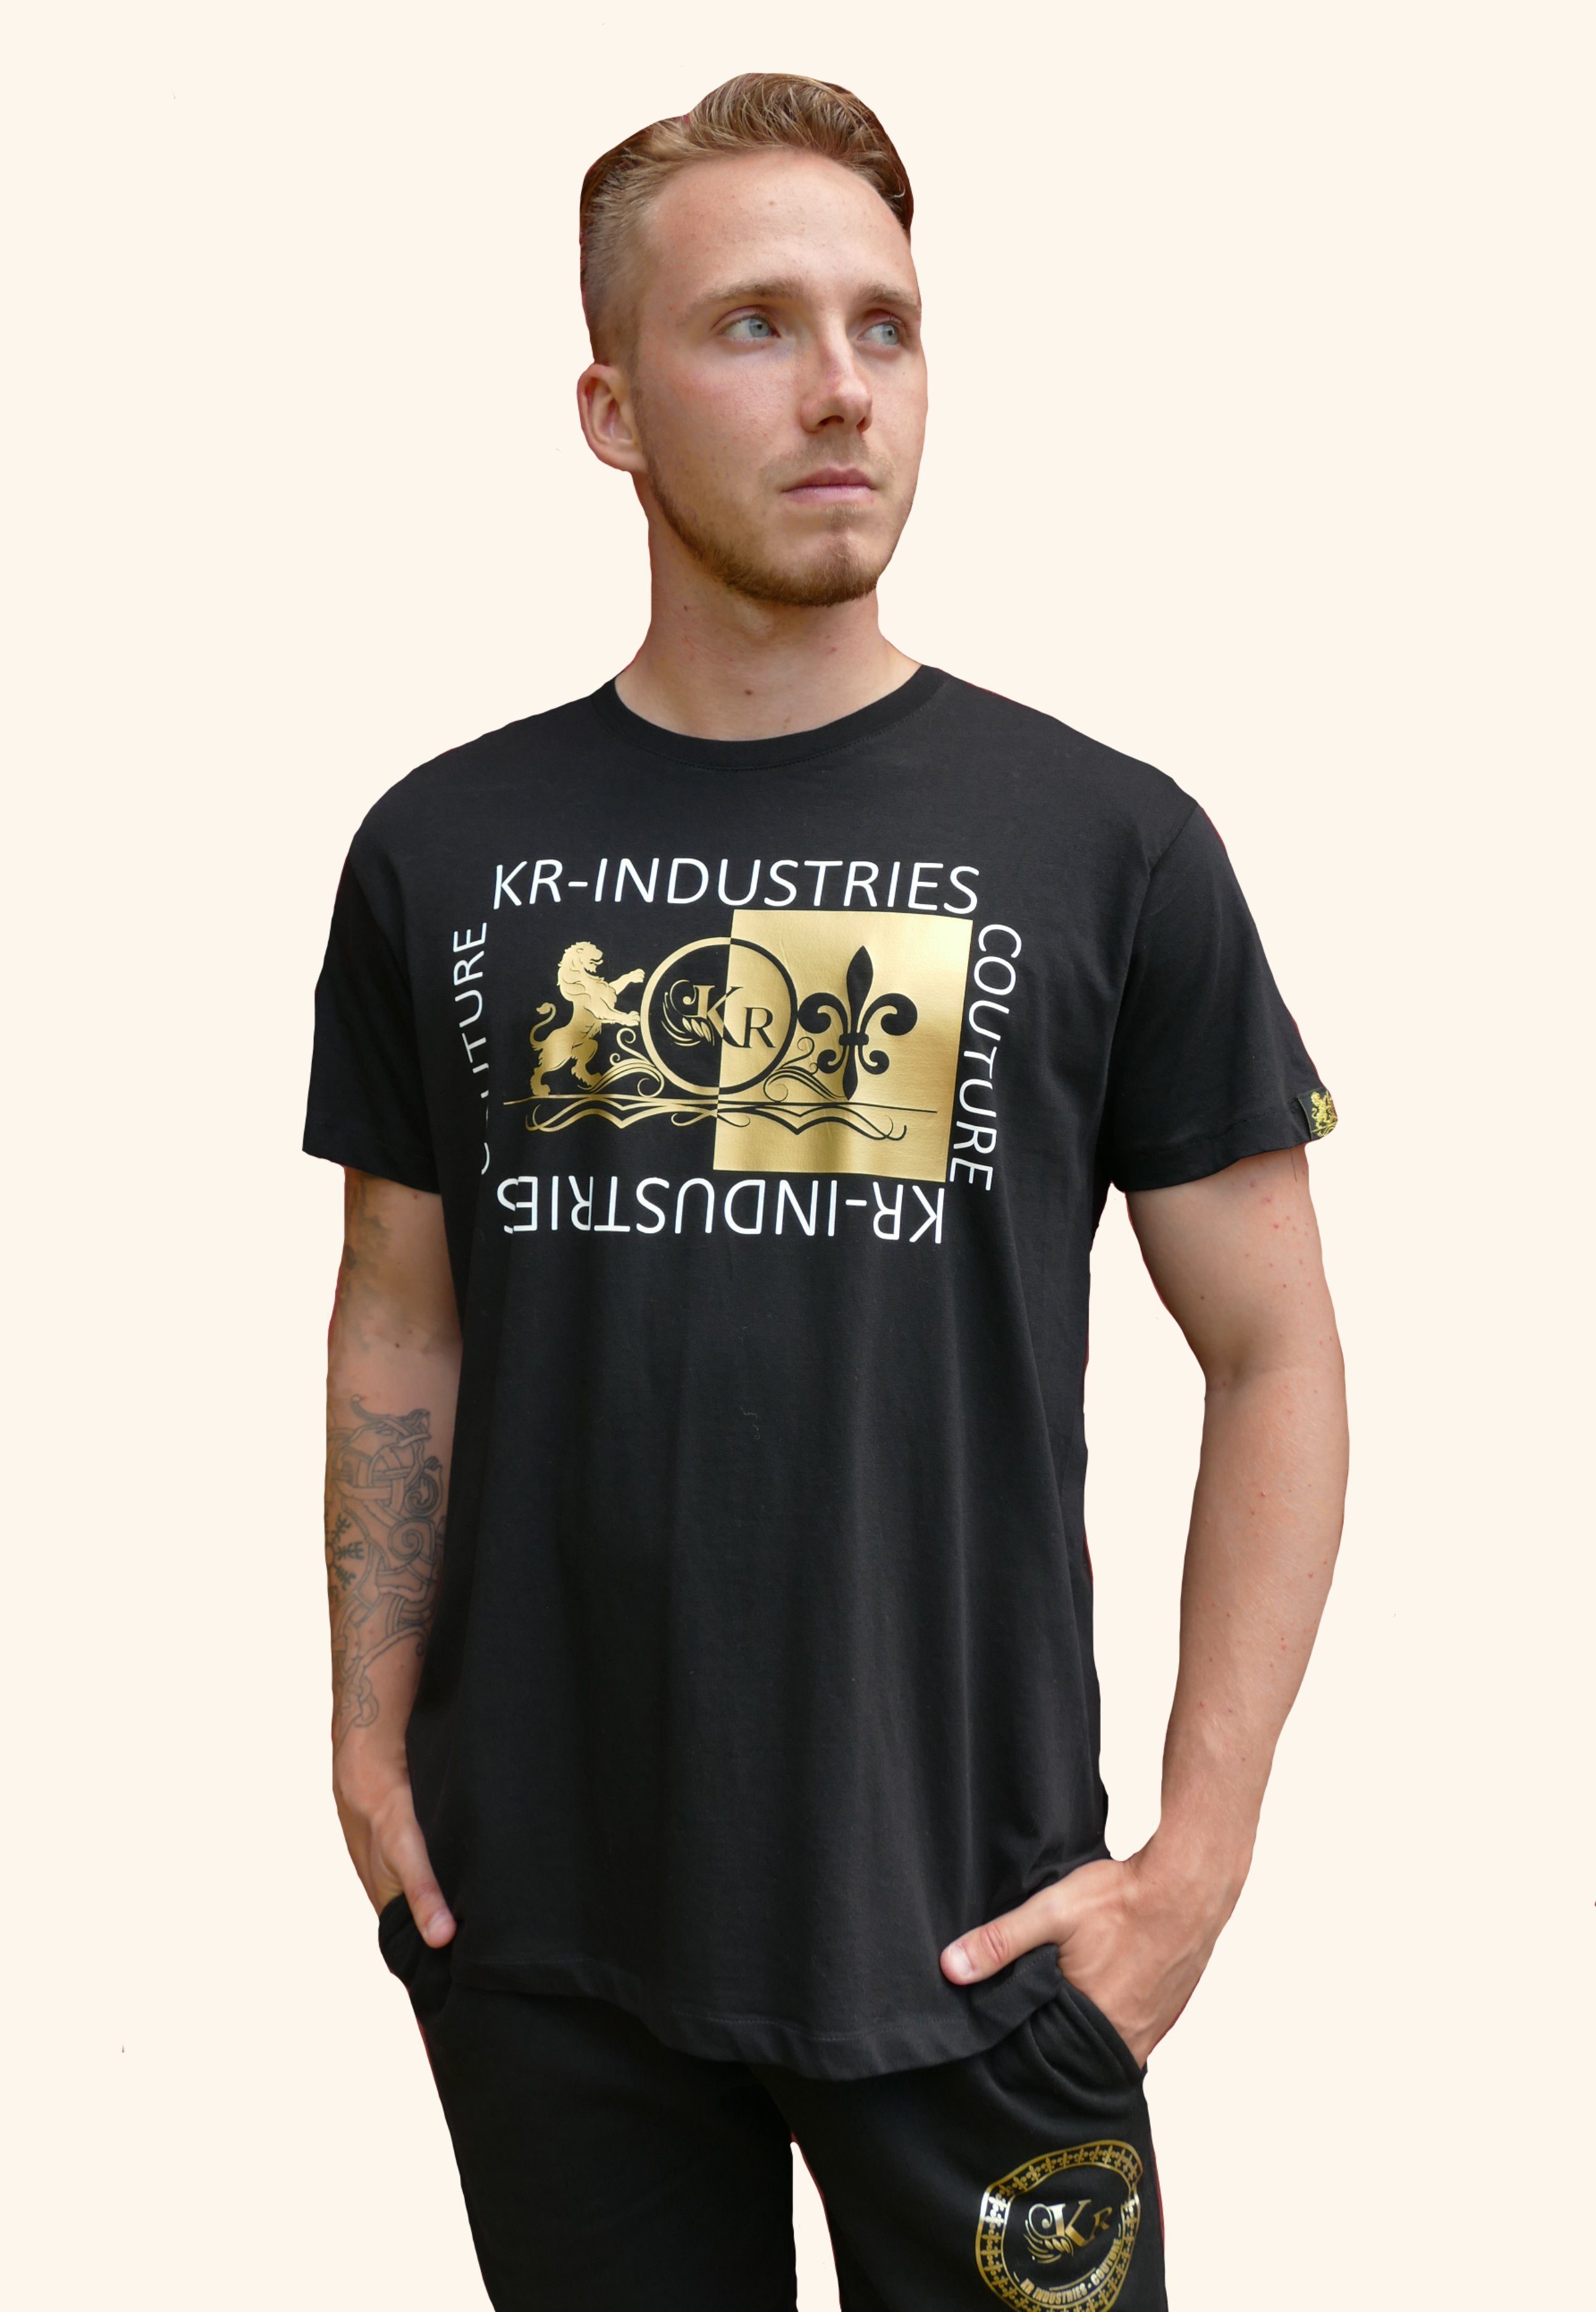 T-Shirt gold in Yin Applikationen Markenlabel & Yang KR-Industries Shirt weiß,